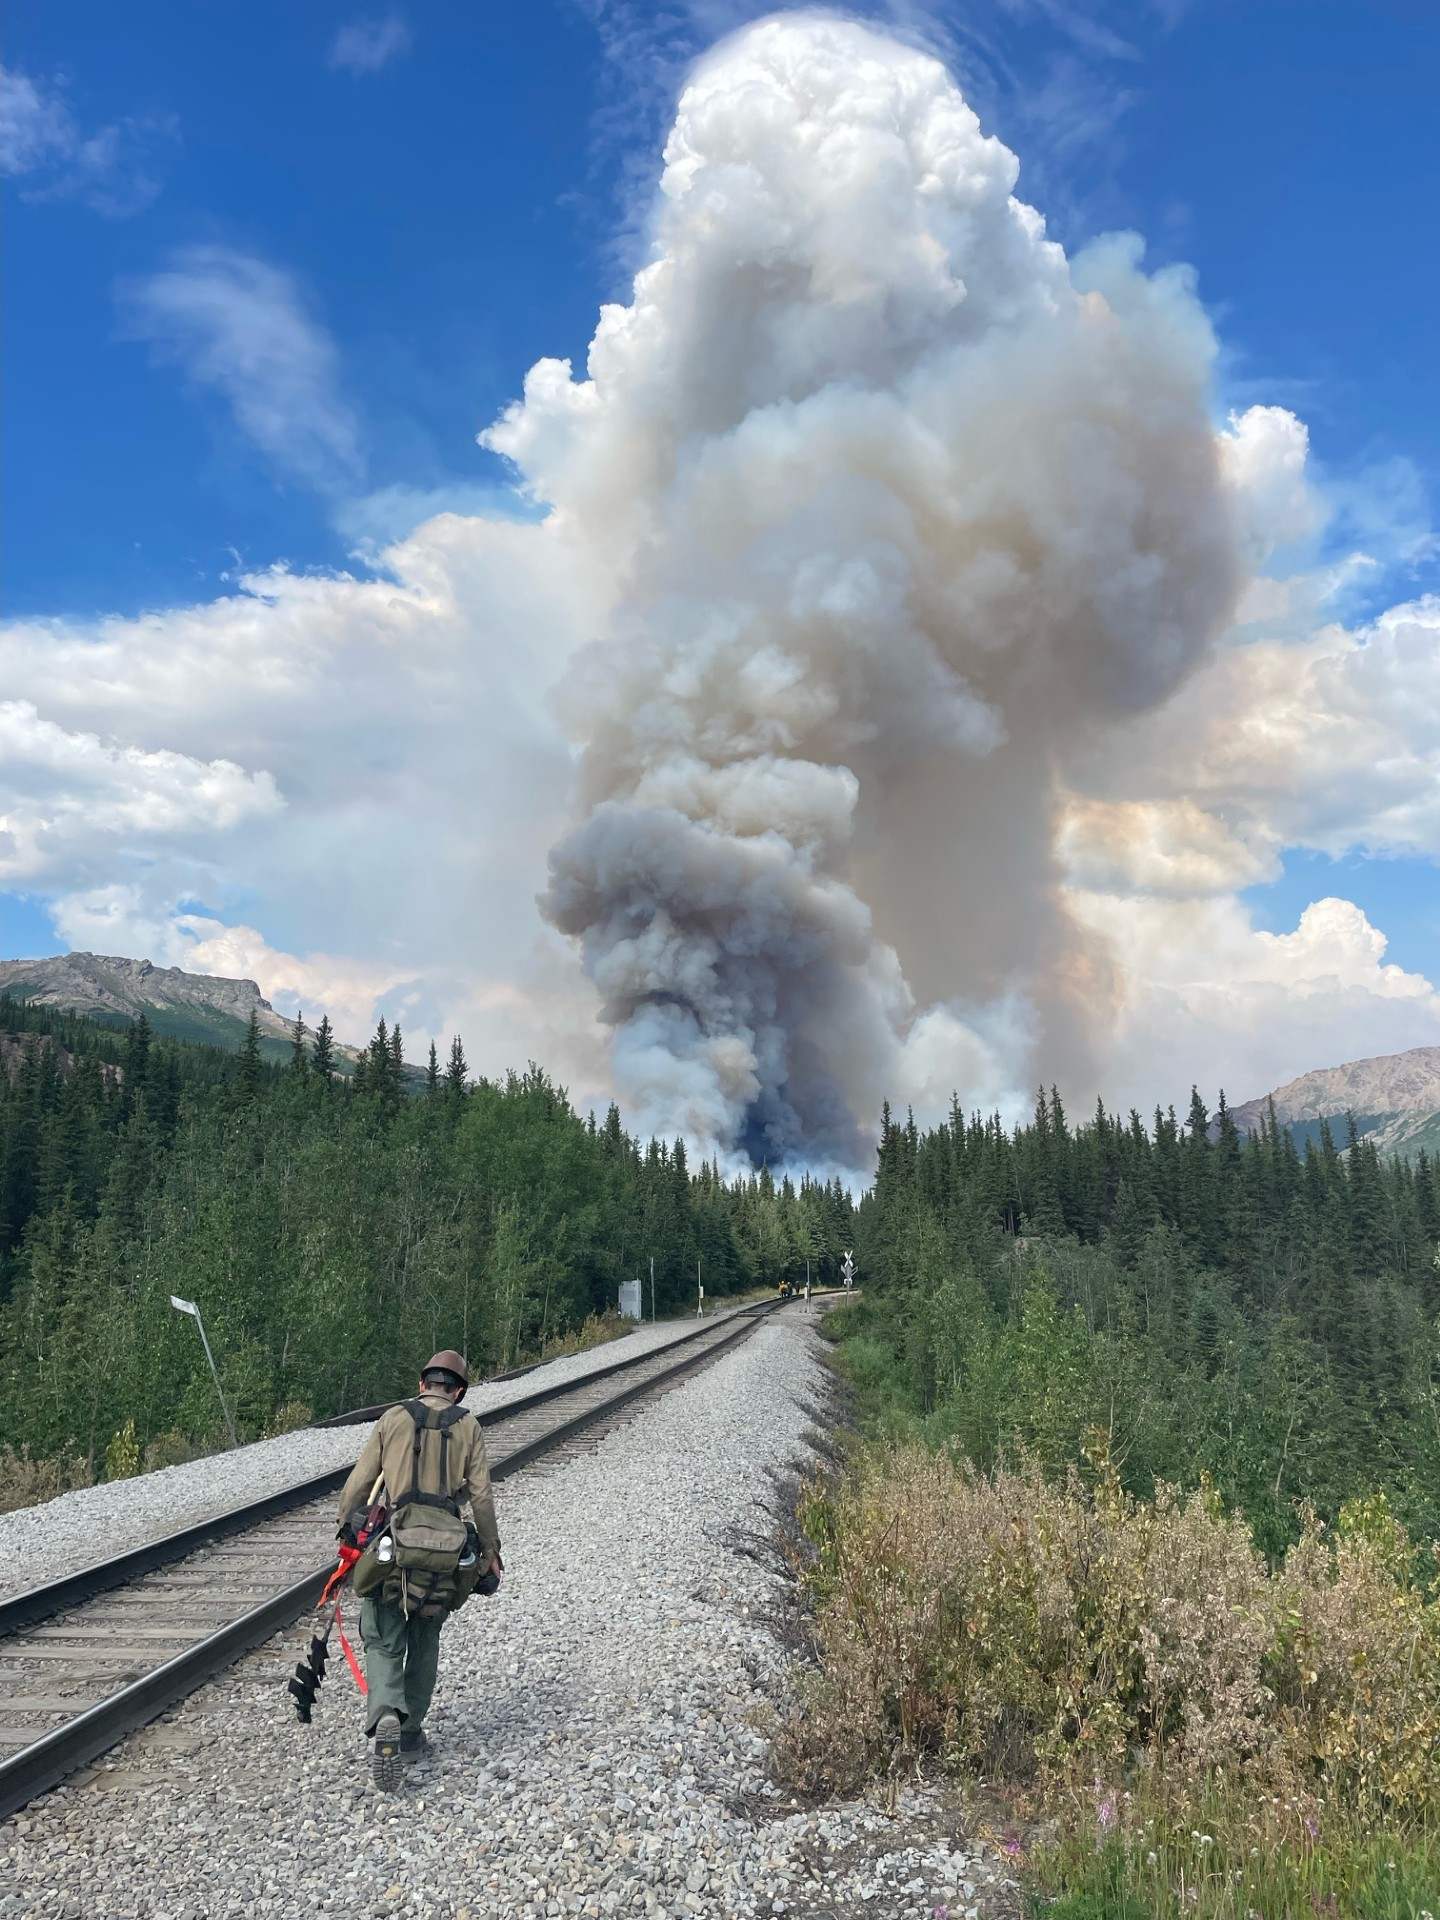 Wildland firefighter walks along railroad tracks toward a large plume of smoke